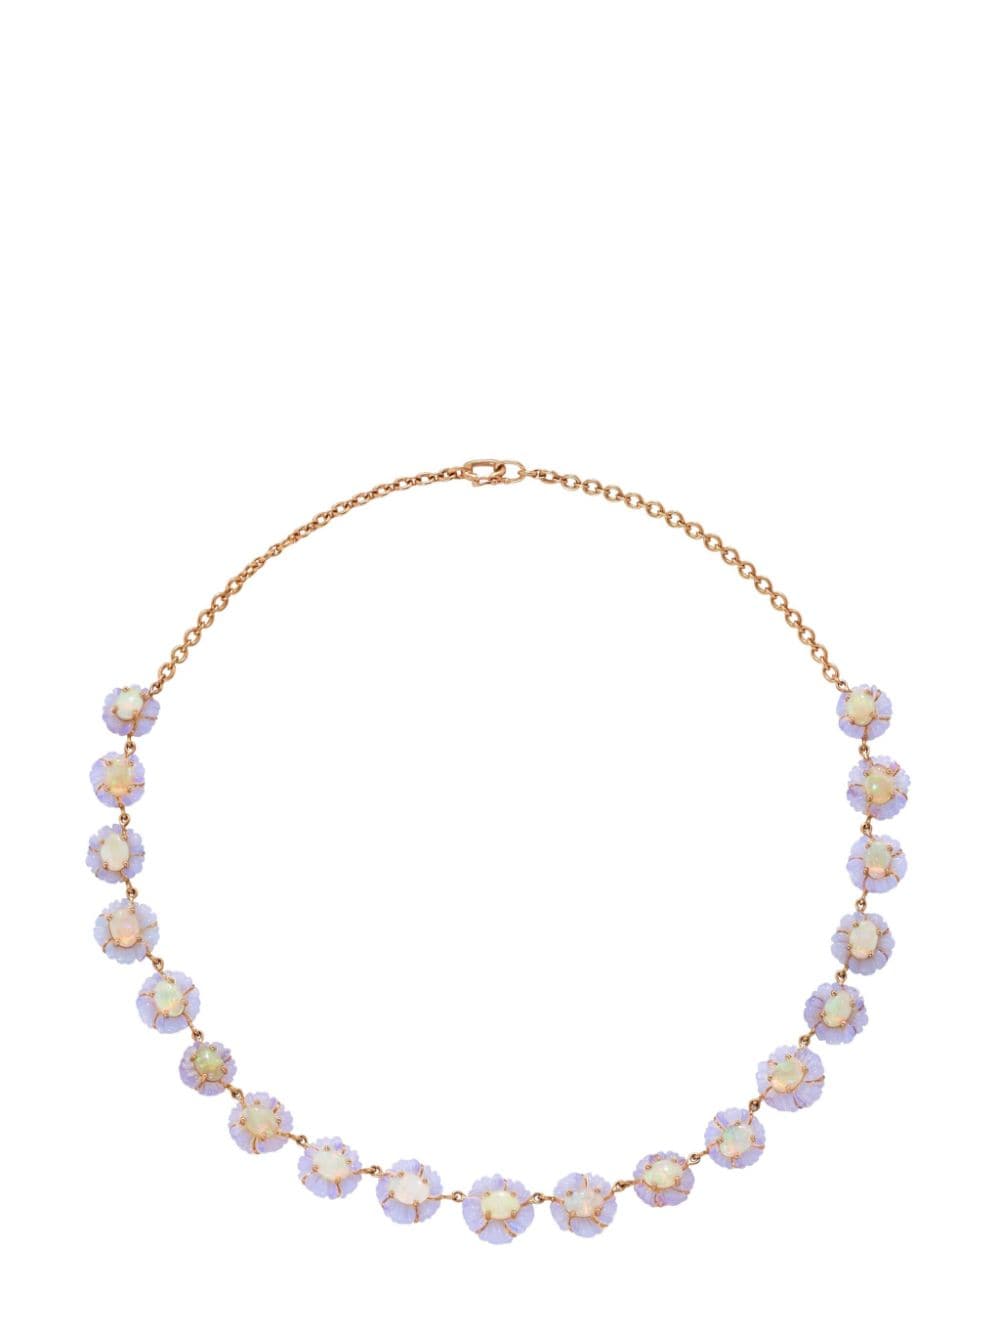 Irene Neuwirth Ooak Crystal Opal Flower Necklace In Pink